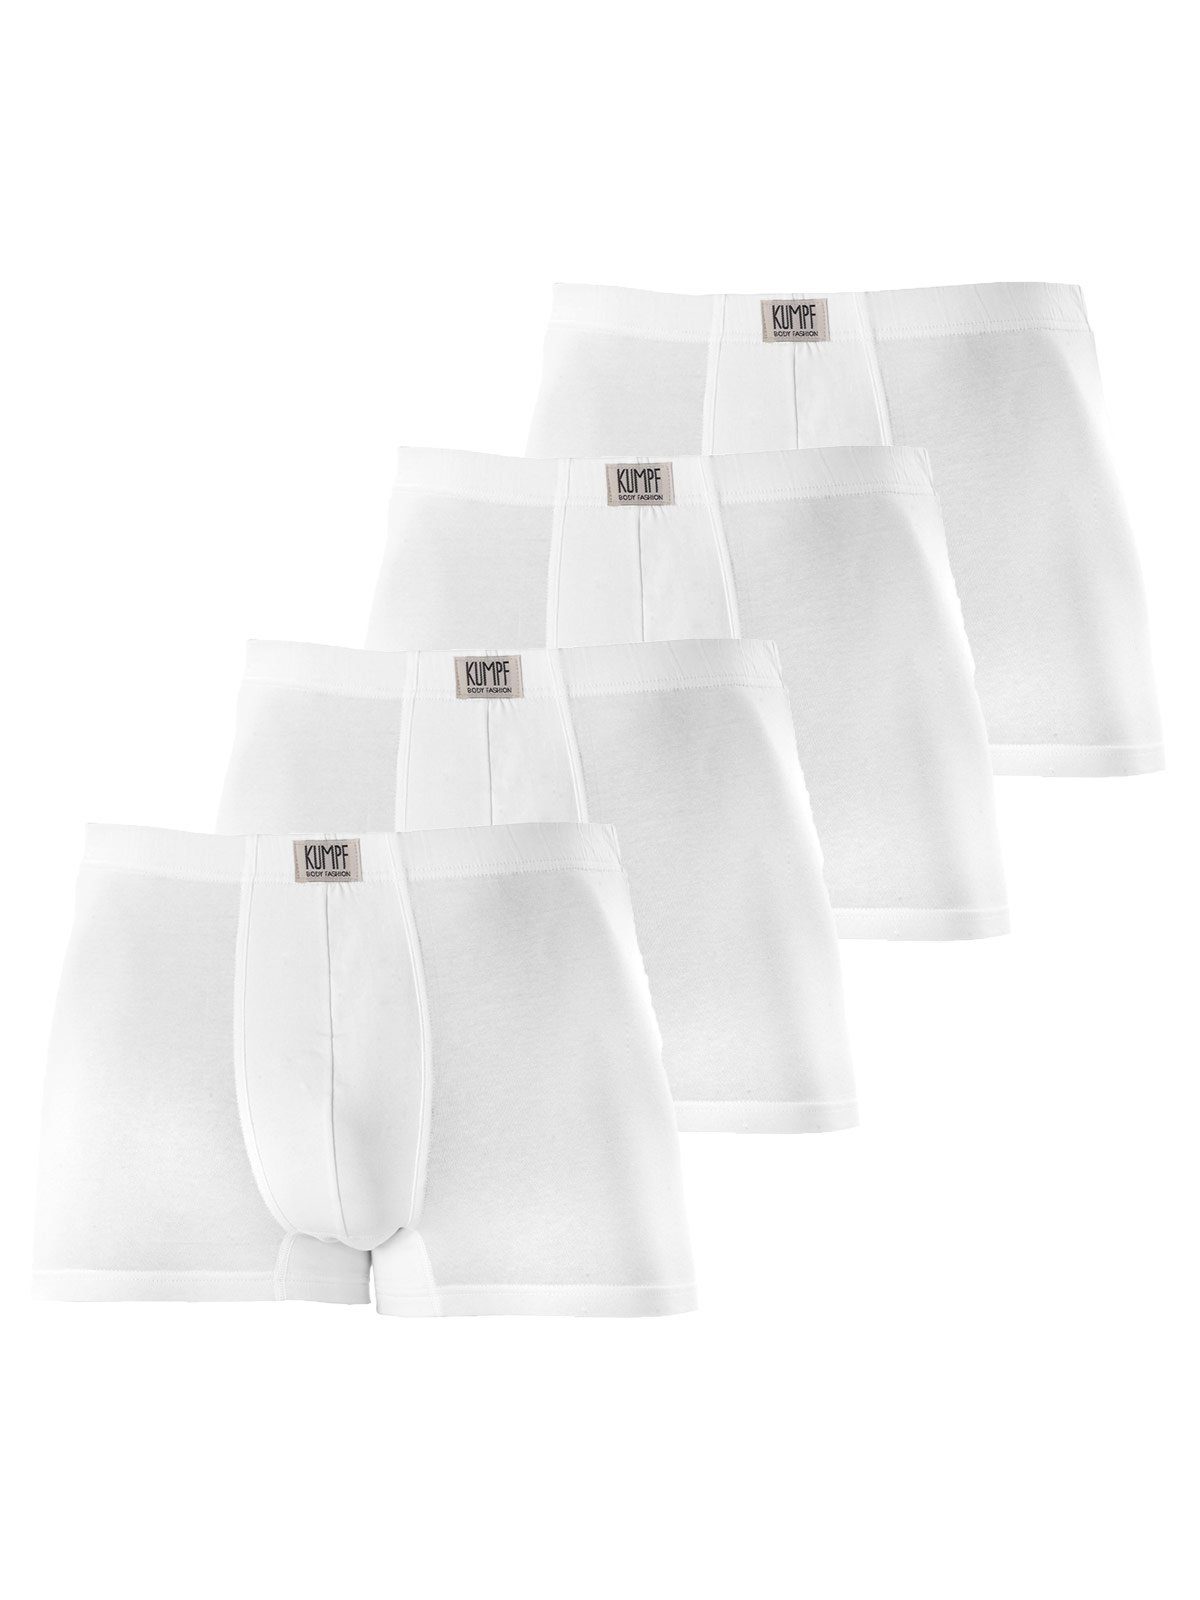 Pants Markenqualität Herren Bio Cotton Sparpack KUMPF Pants 4-St) (Spar-Set, weiss hohe 4er Retro